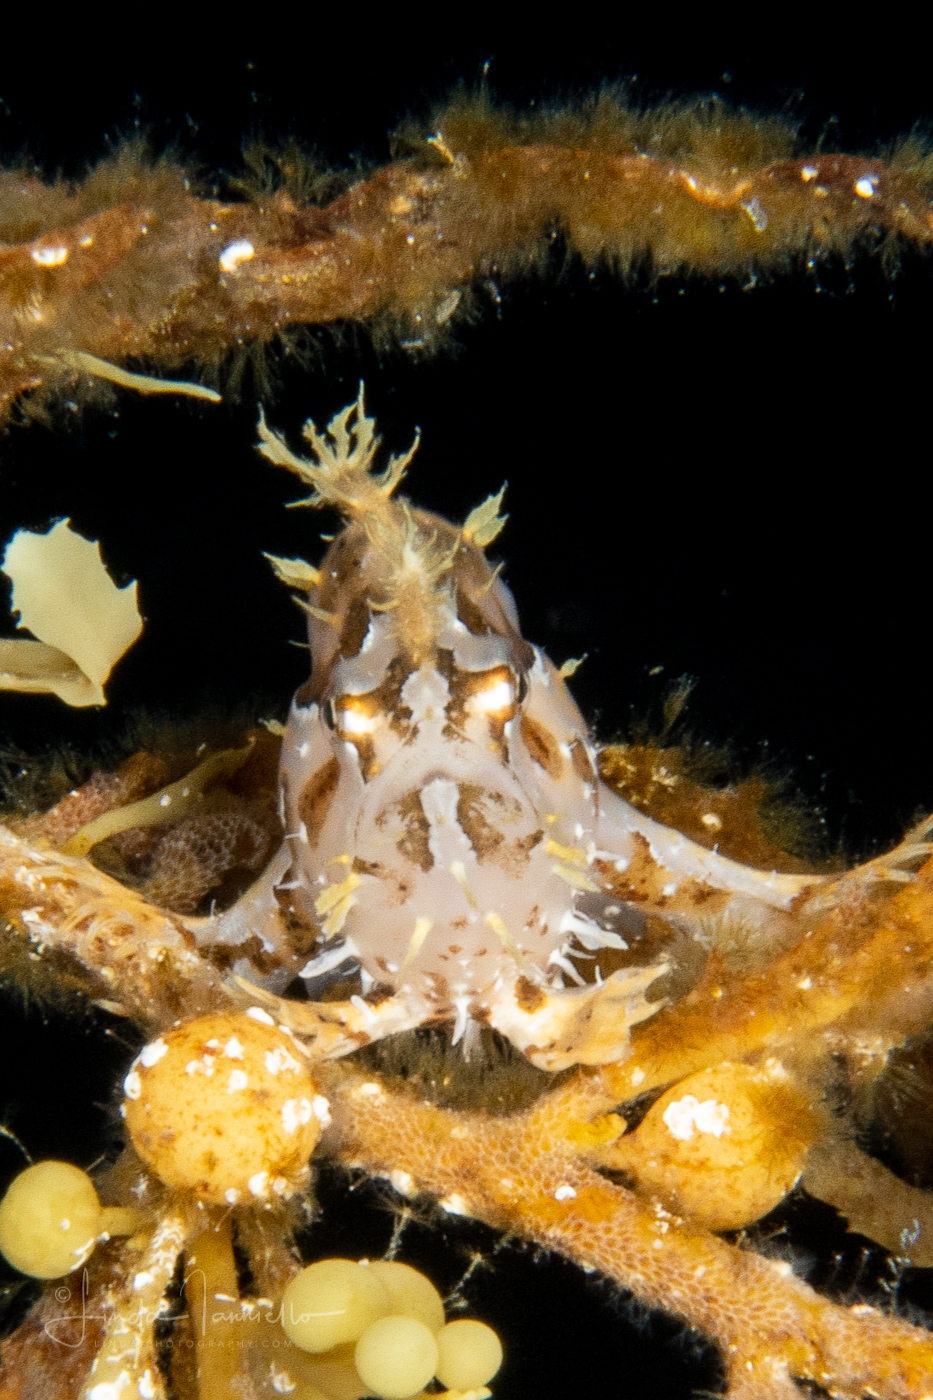 Sargassumfish - Antennariidae Family - Histrio histrio